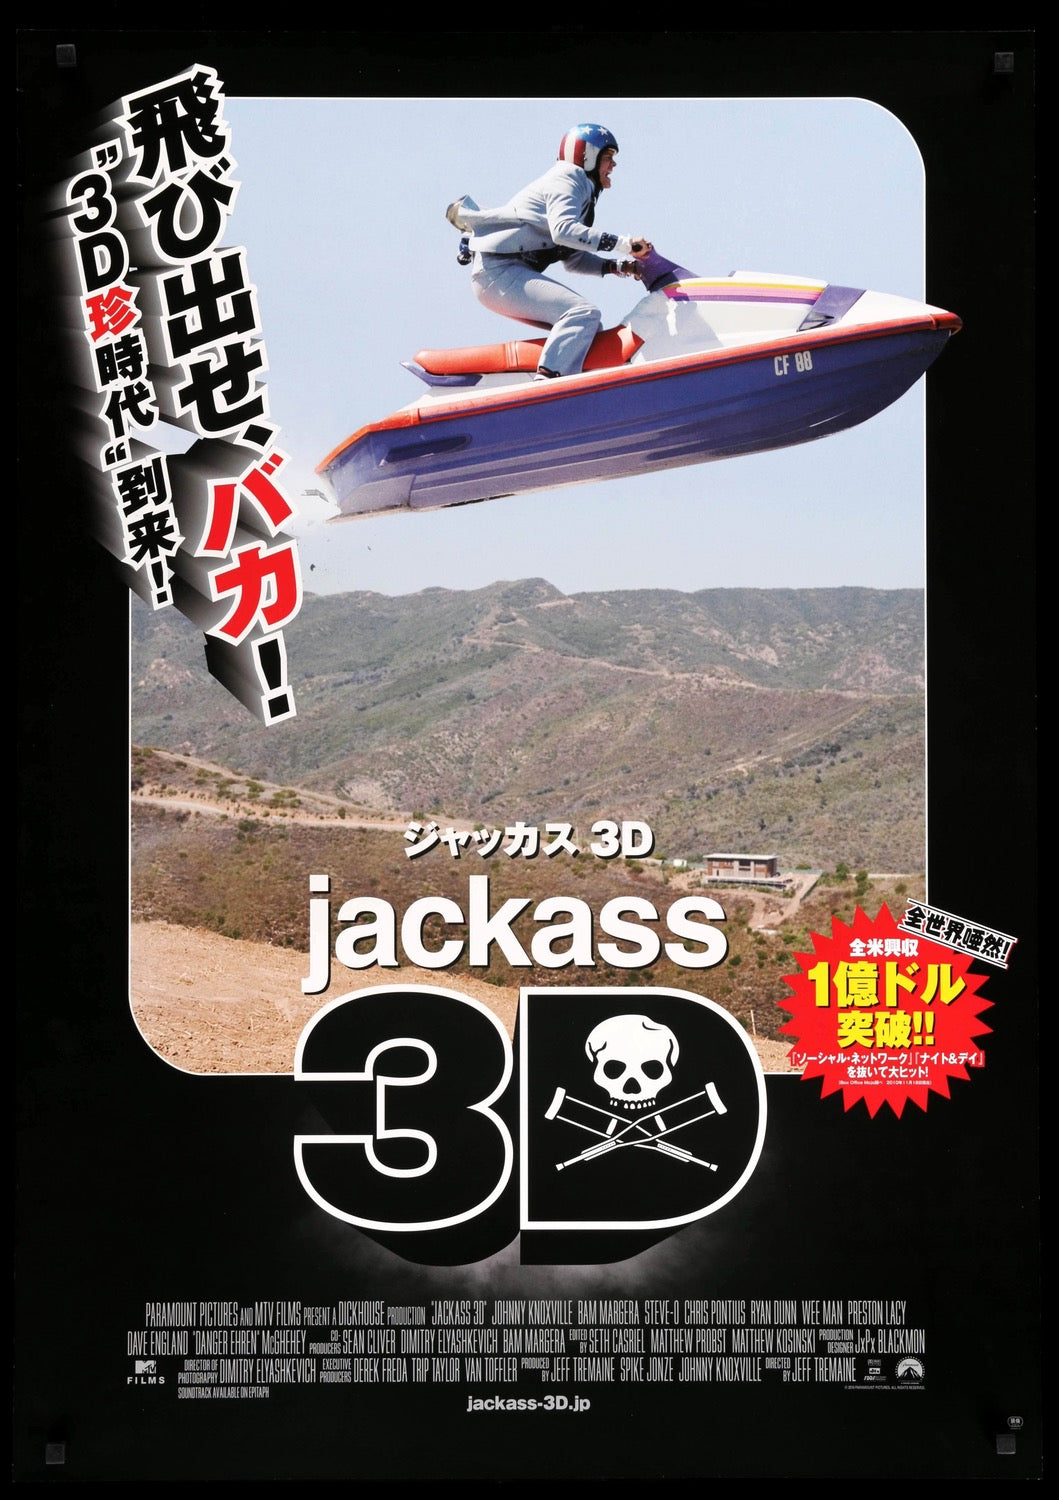 Jackass 3D (2010) original movie poster for sale at Original Film Art